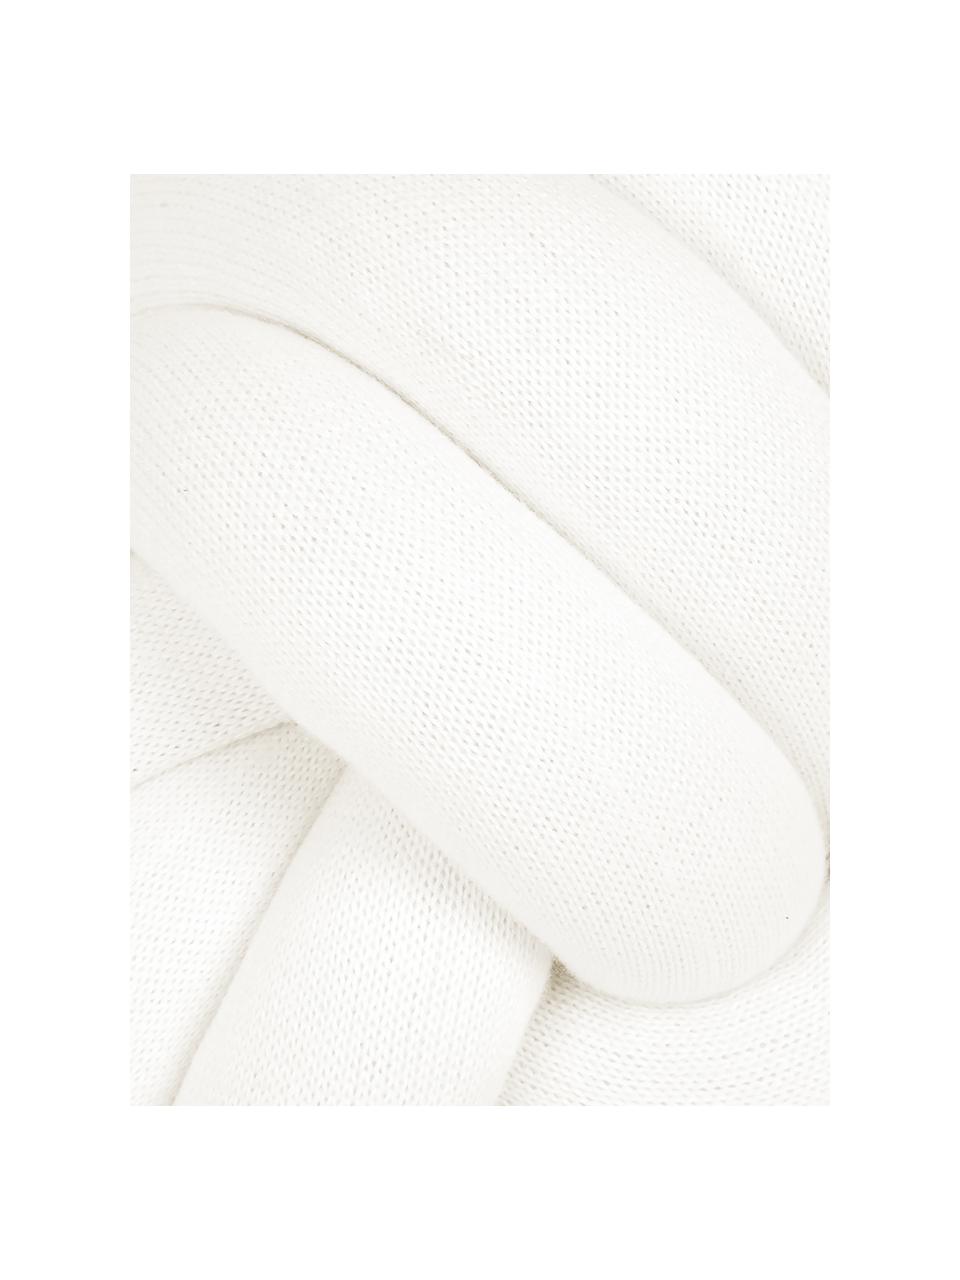 Cojín nudo Twist, Blanco, Ø 30 cm